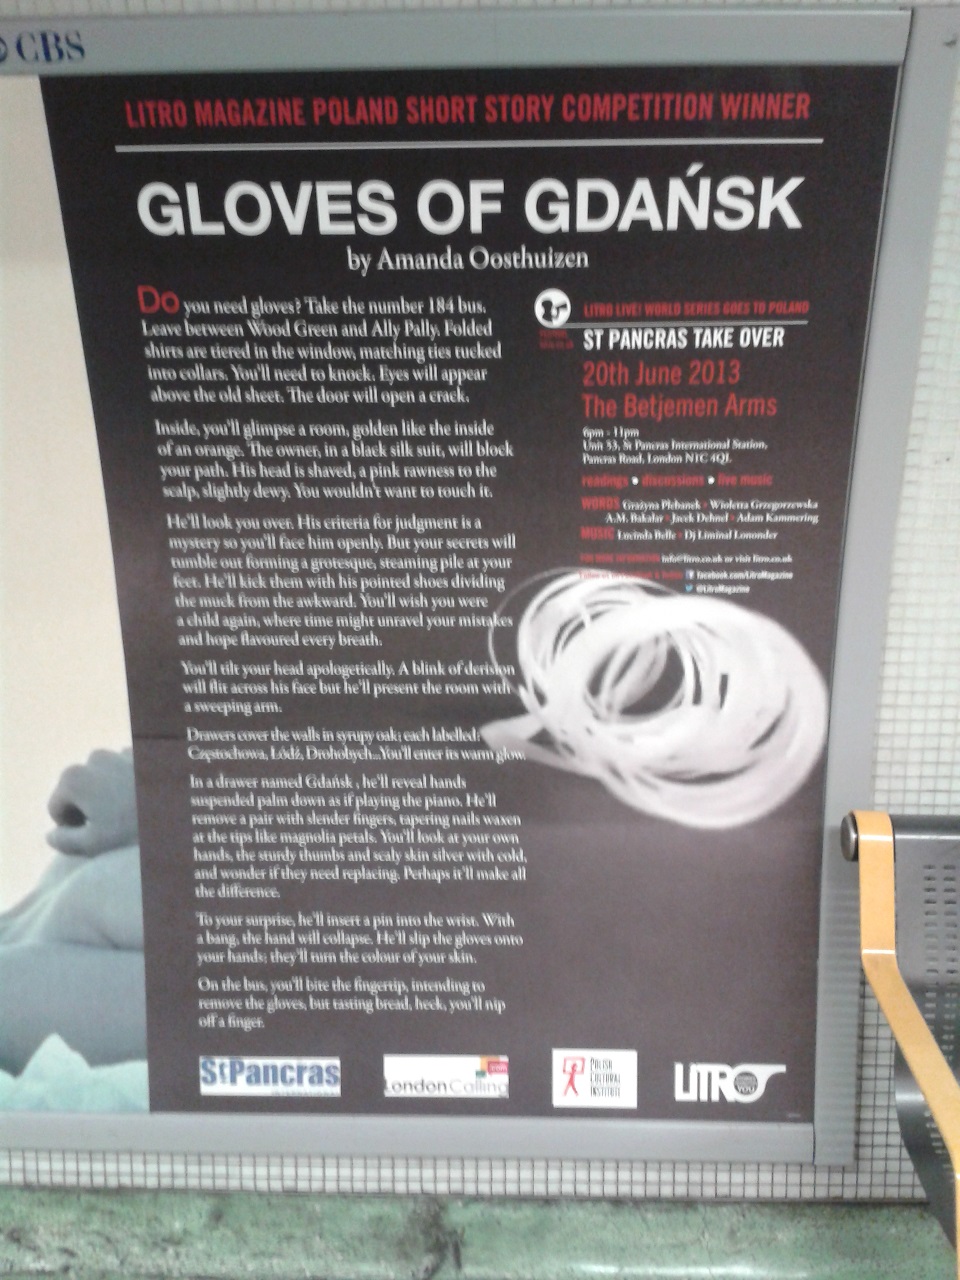 Gloves of Gdansk pic